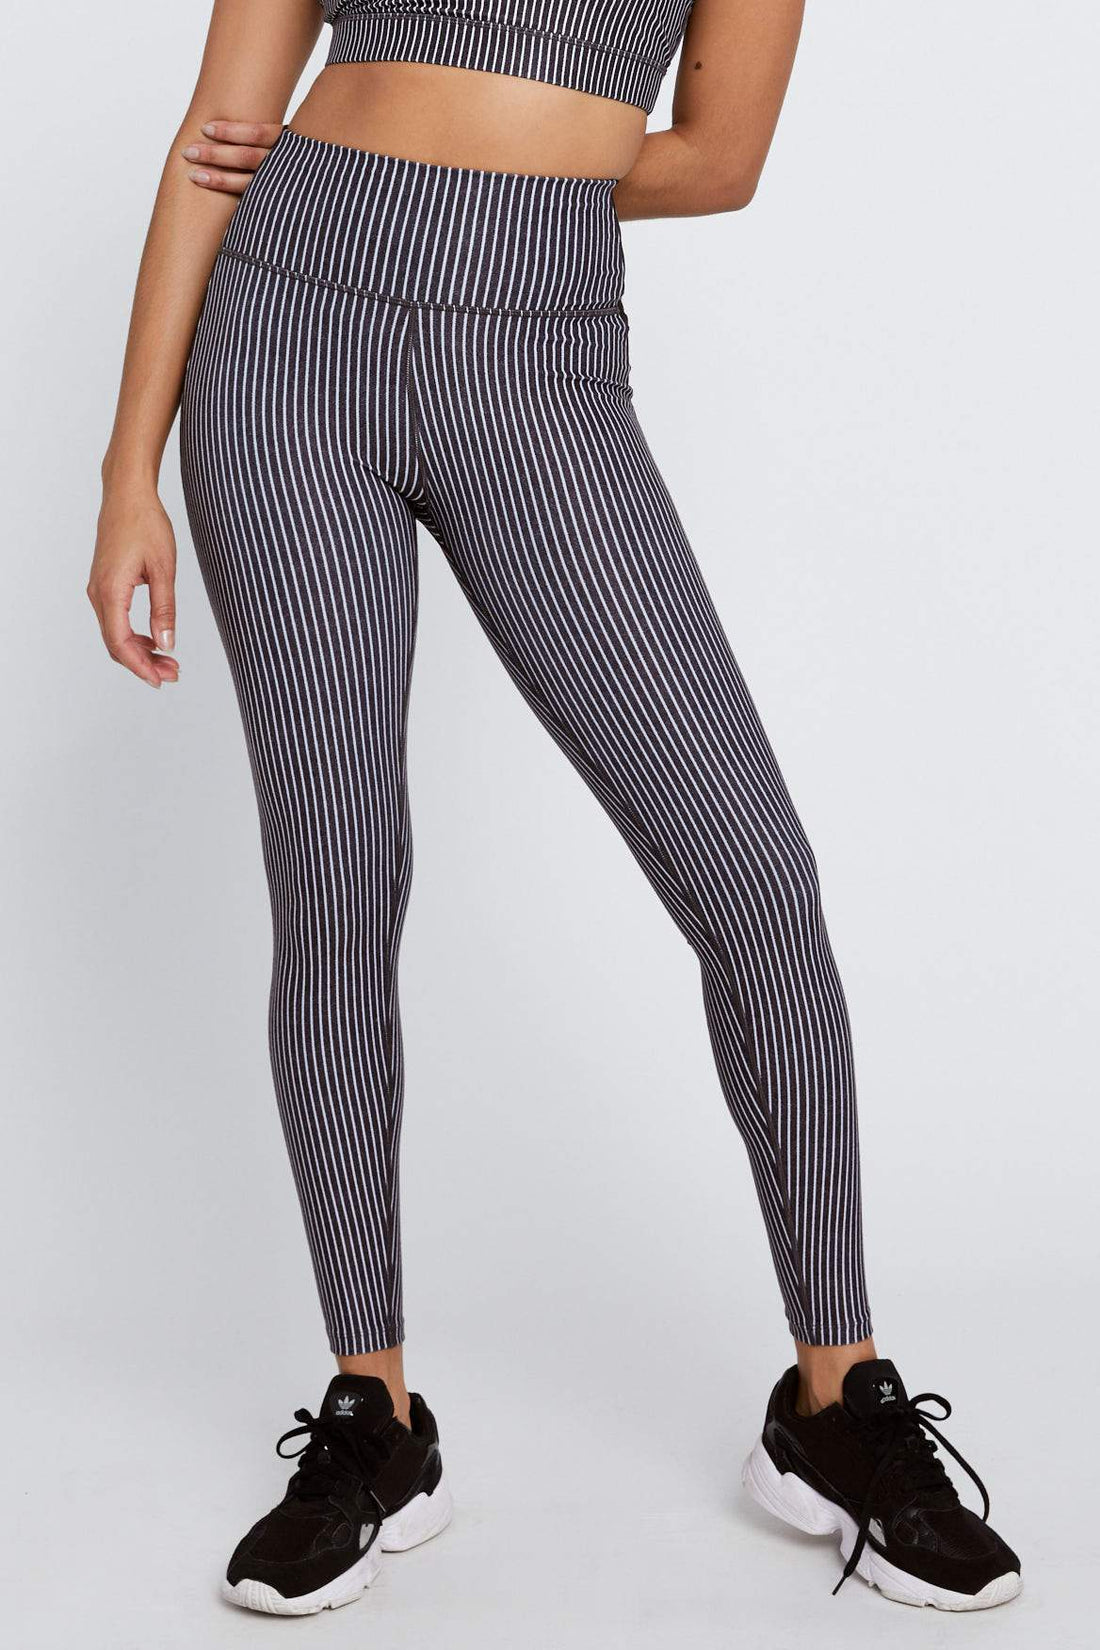 Harper Leggings Black And White Stripe – Wear It To Heart